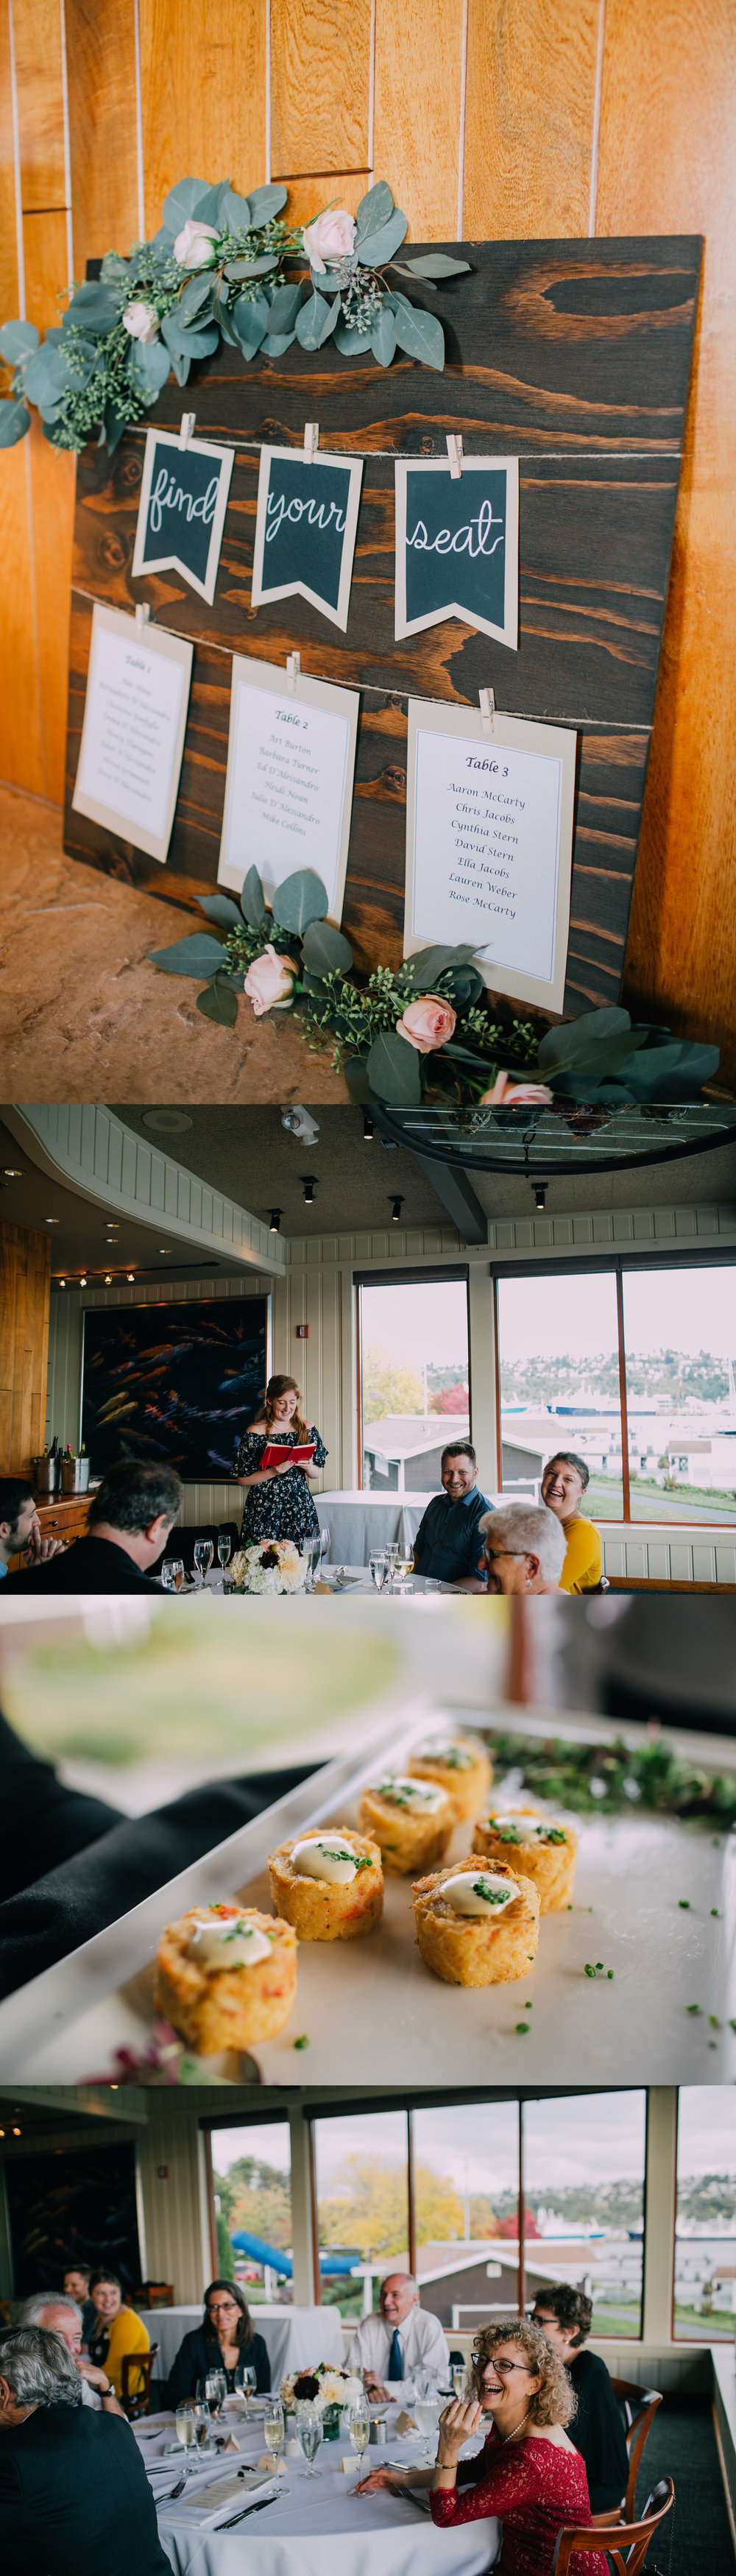 intimate small wedding photographer seattle washington pnw restaurant reception -2.jpg